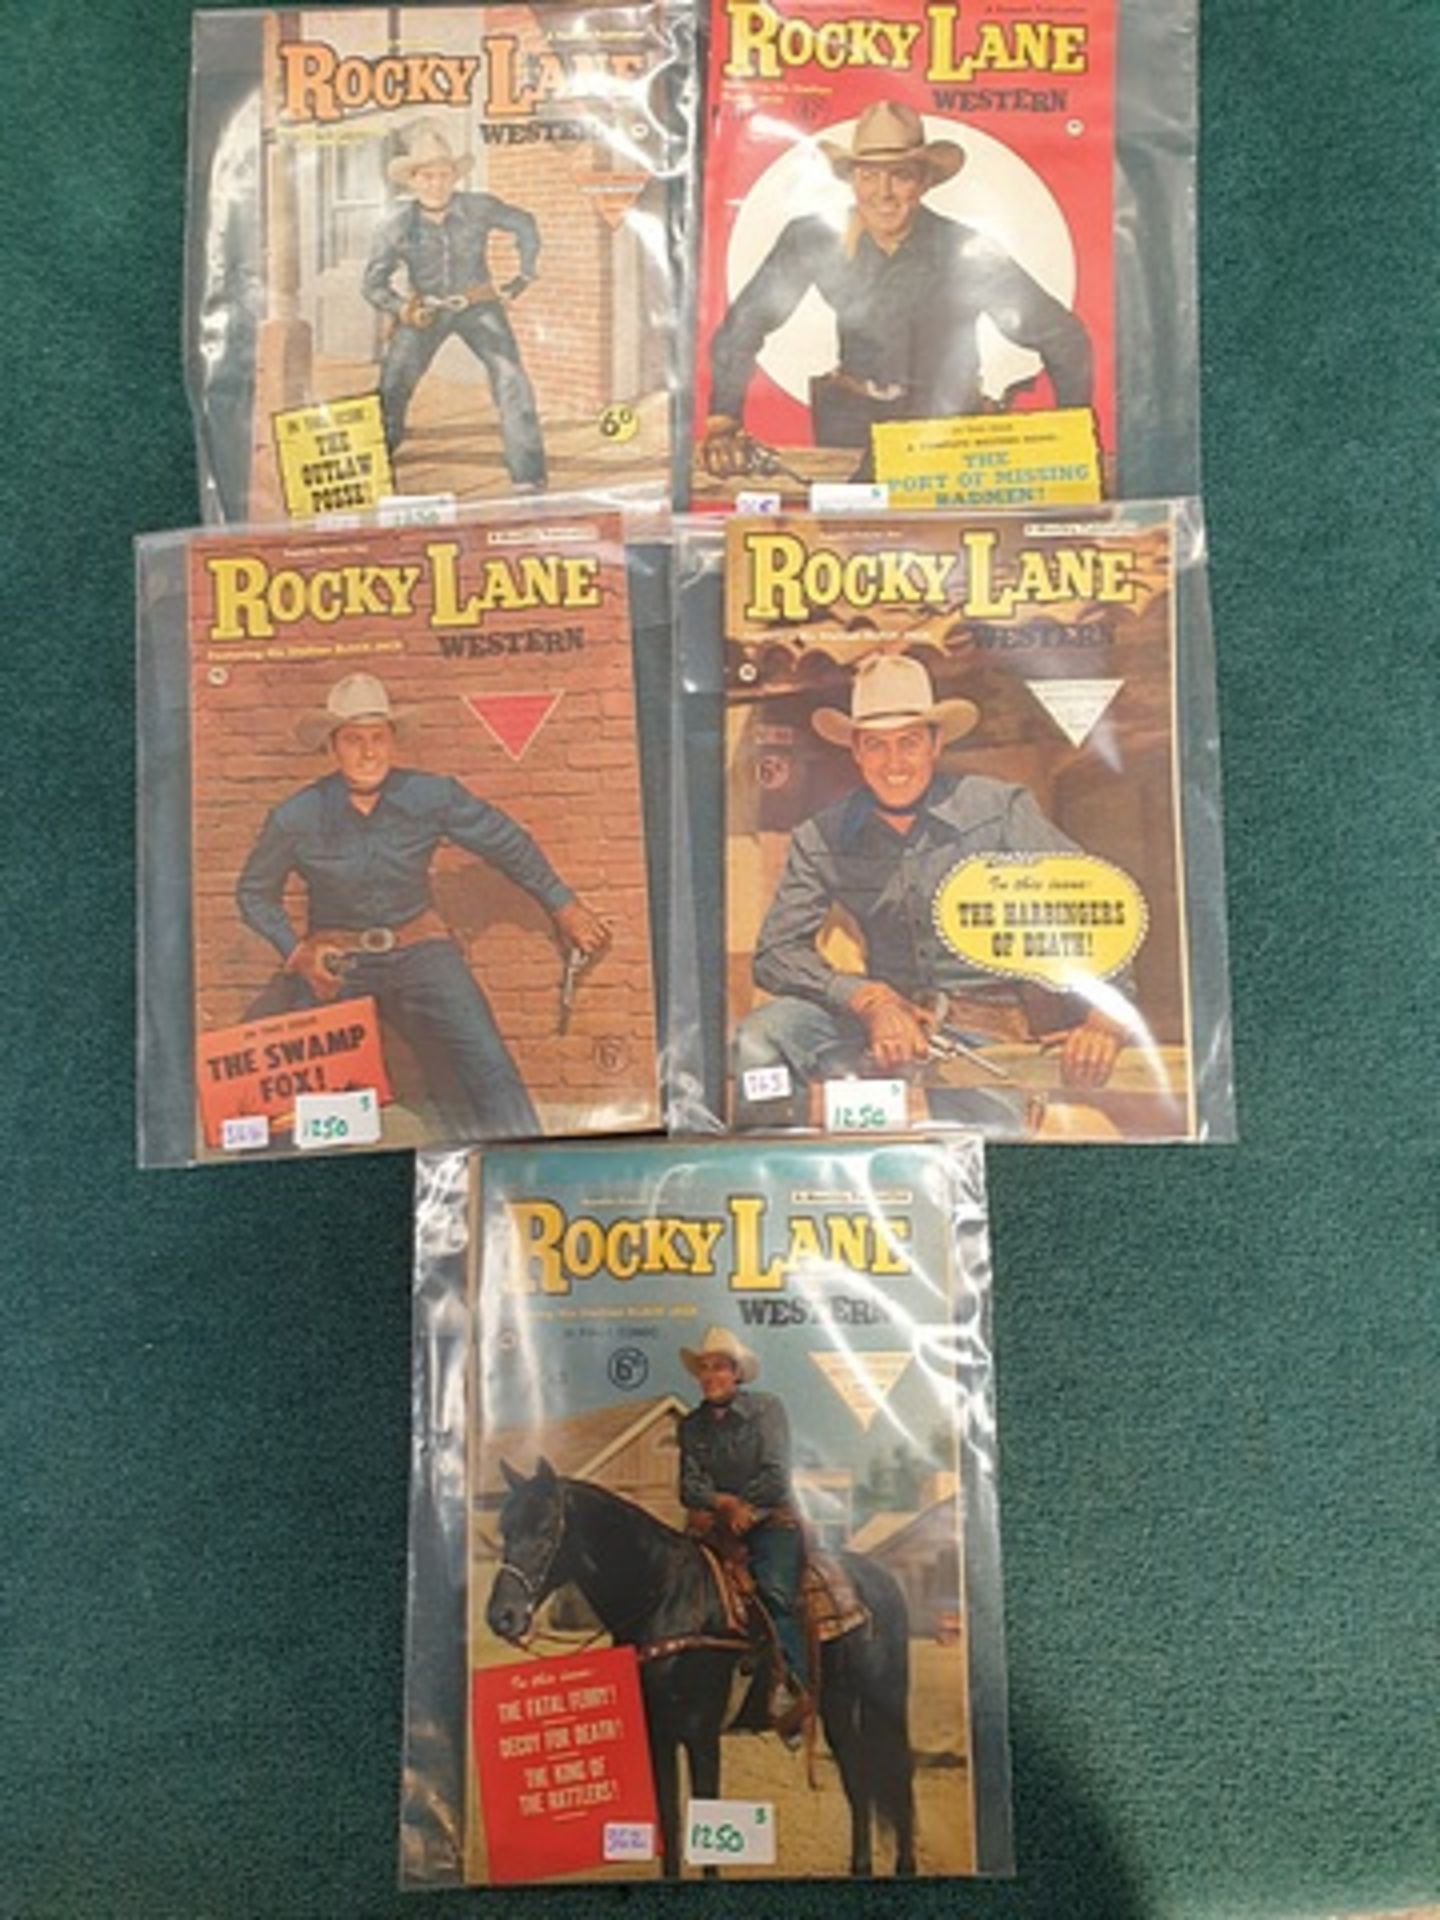 5 x Rocky Lane Wester Series Comics comprising Rocky Lane Western #63 L. Miller & Son, 1950 Series